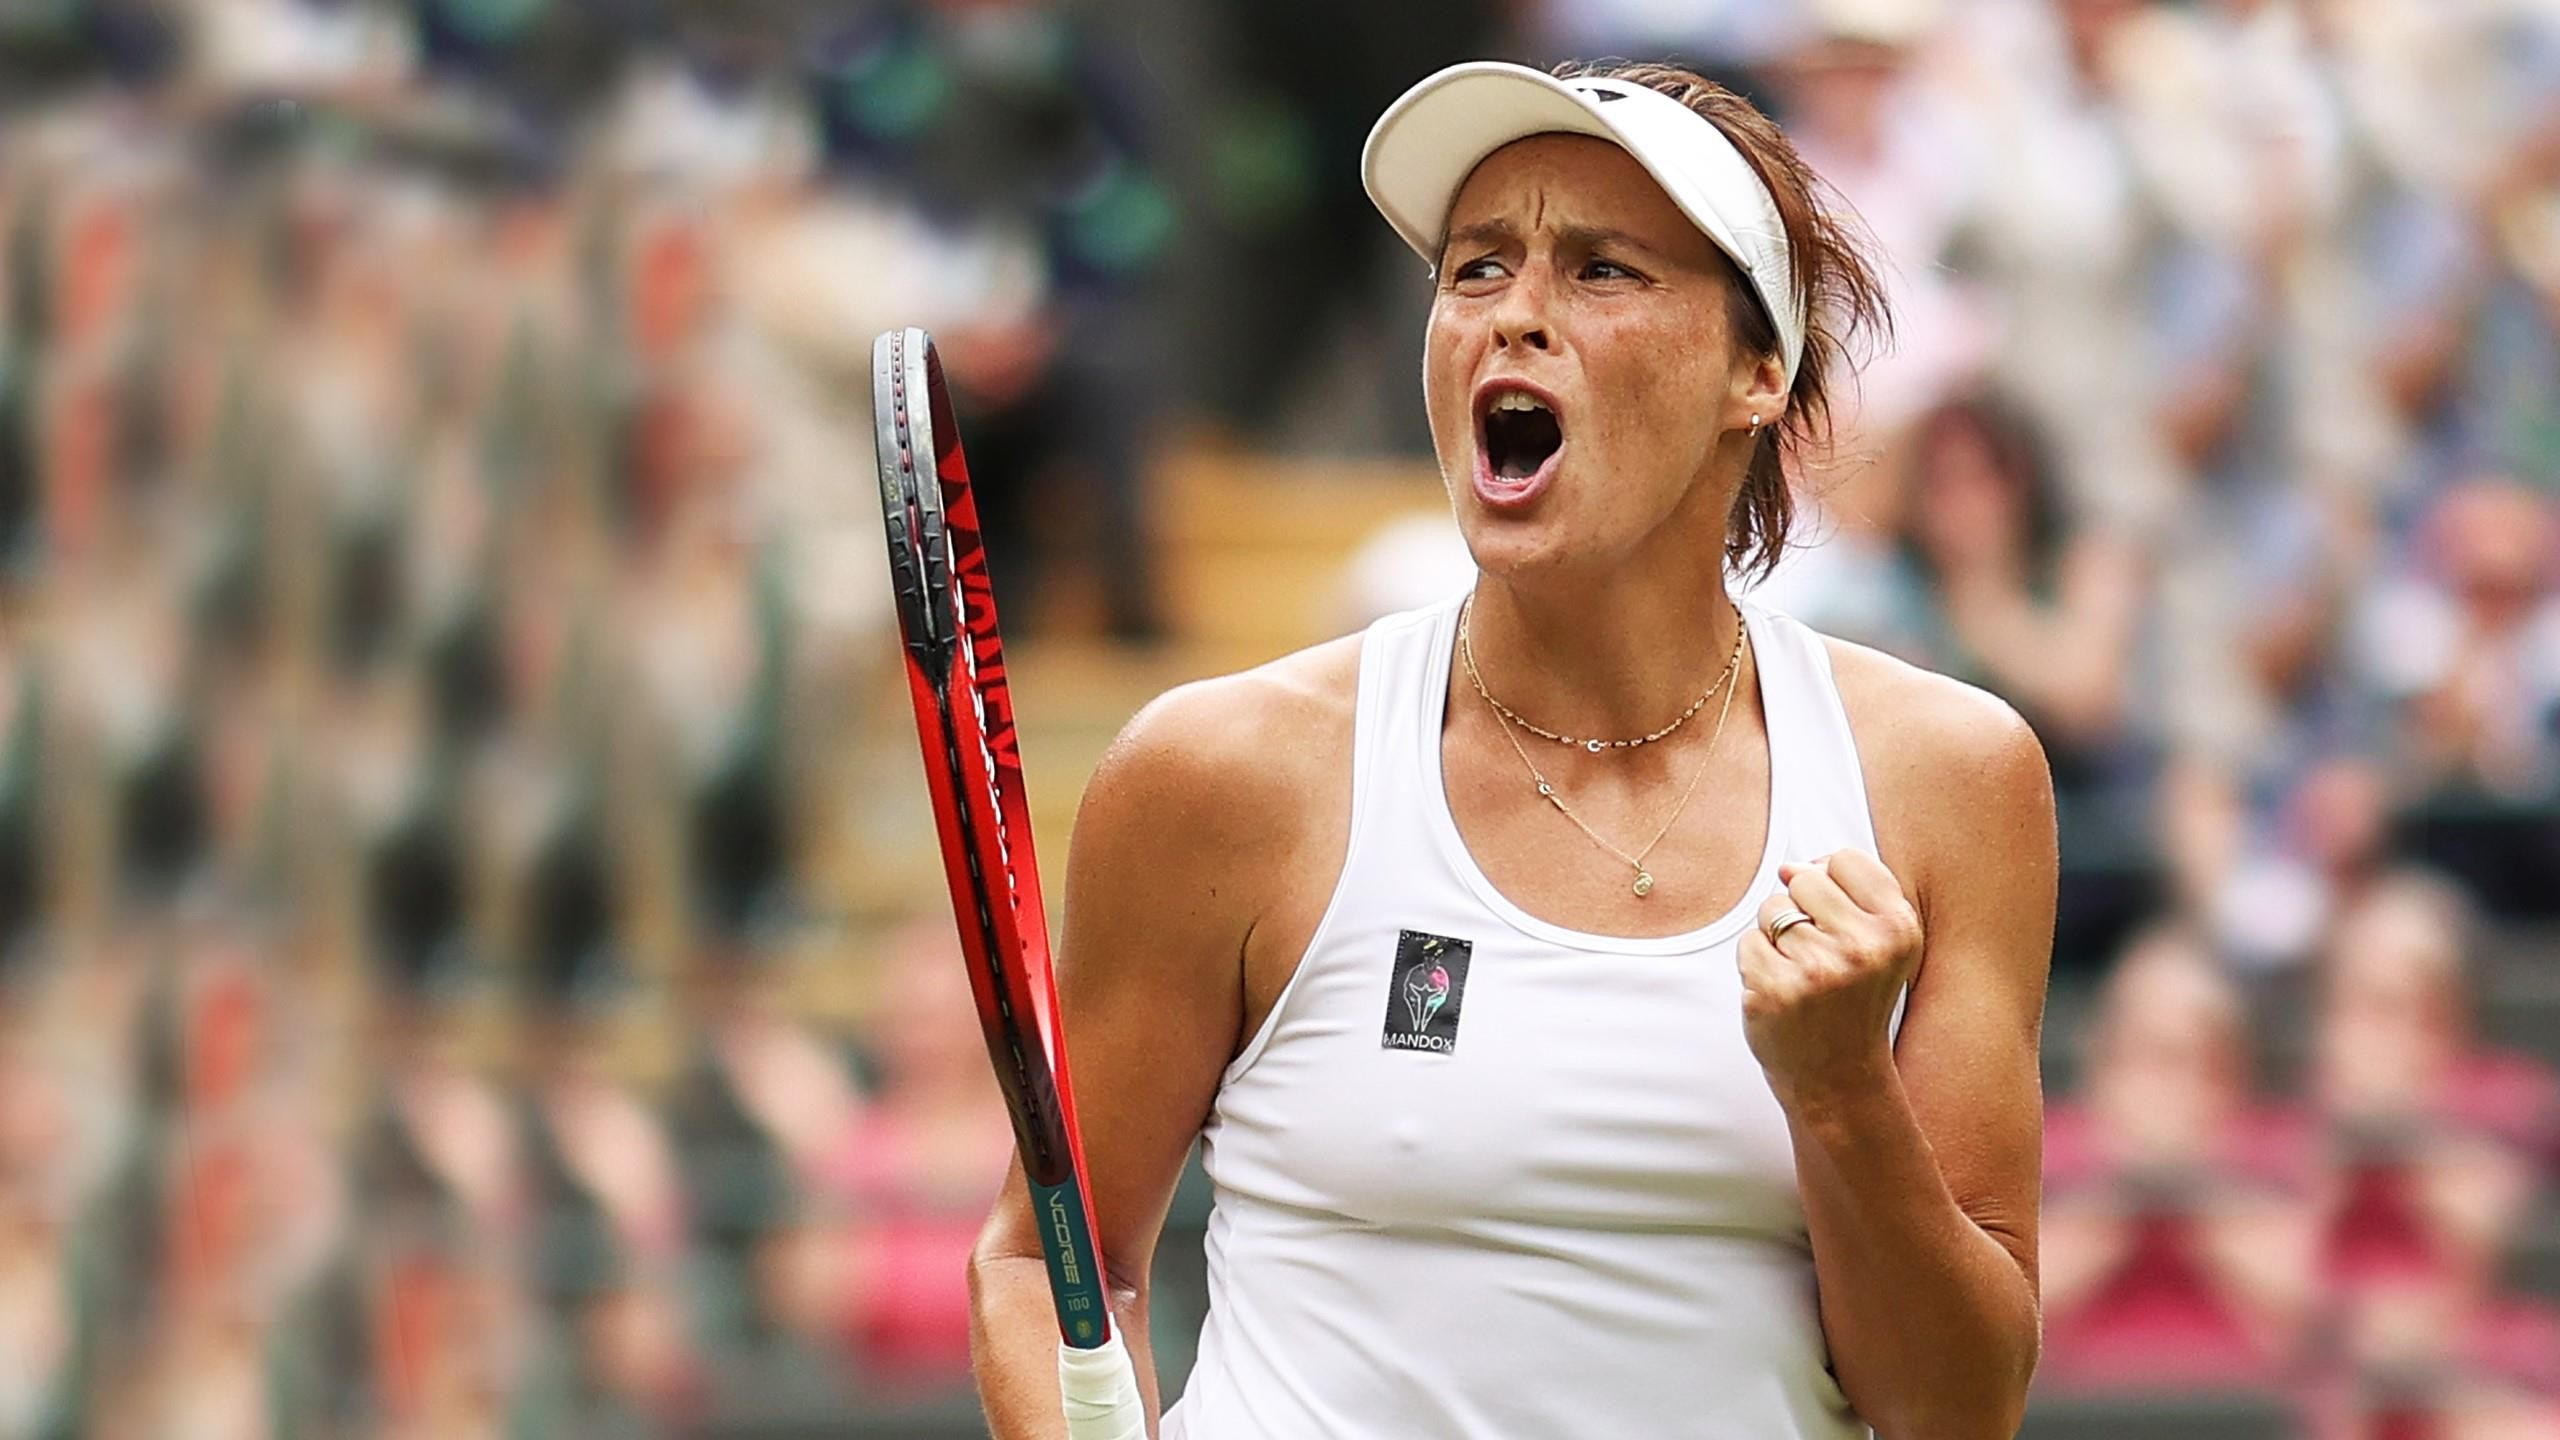 Wimbledon Insane, amazing - Kim Clijsters, Martina Hingis lead praise for mum-of-two Tatjana Marias run